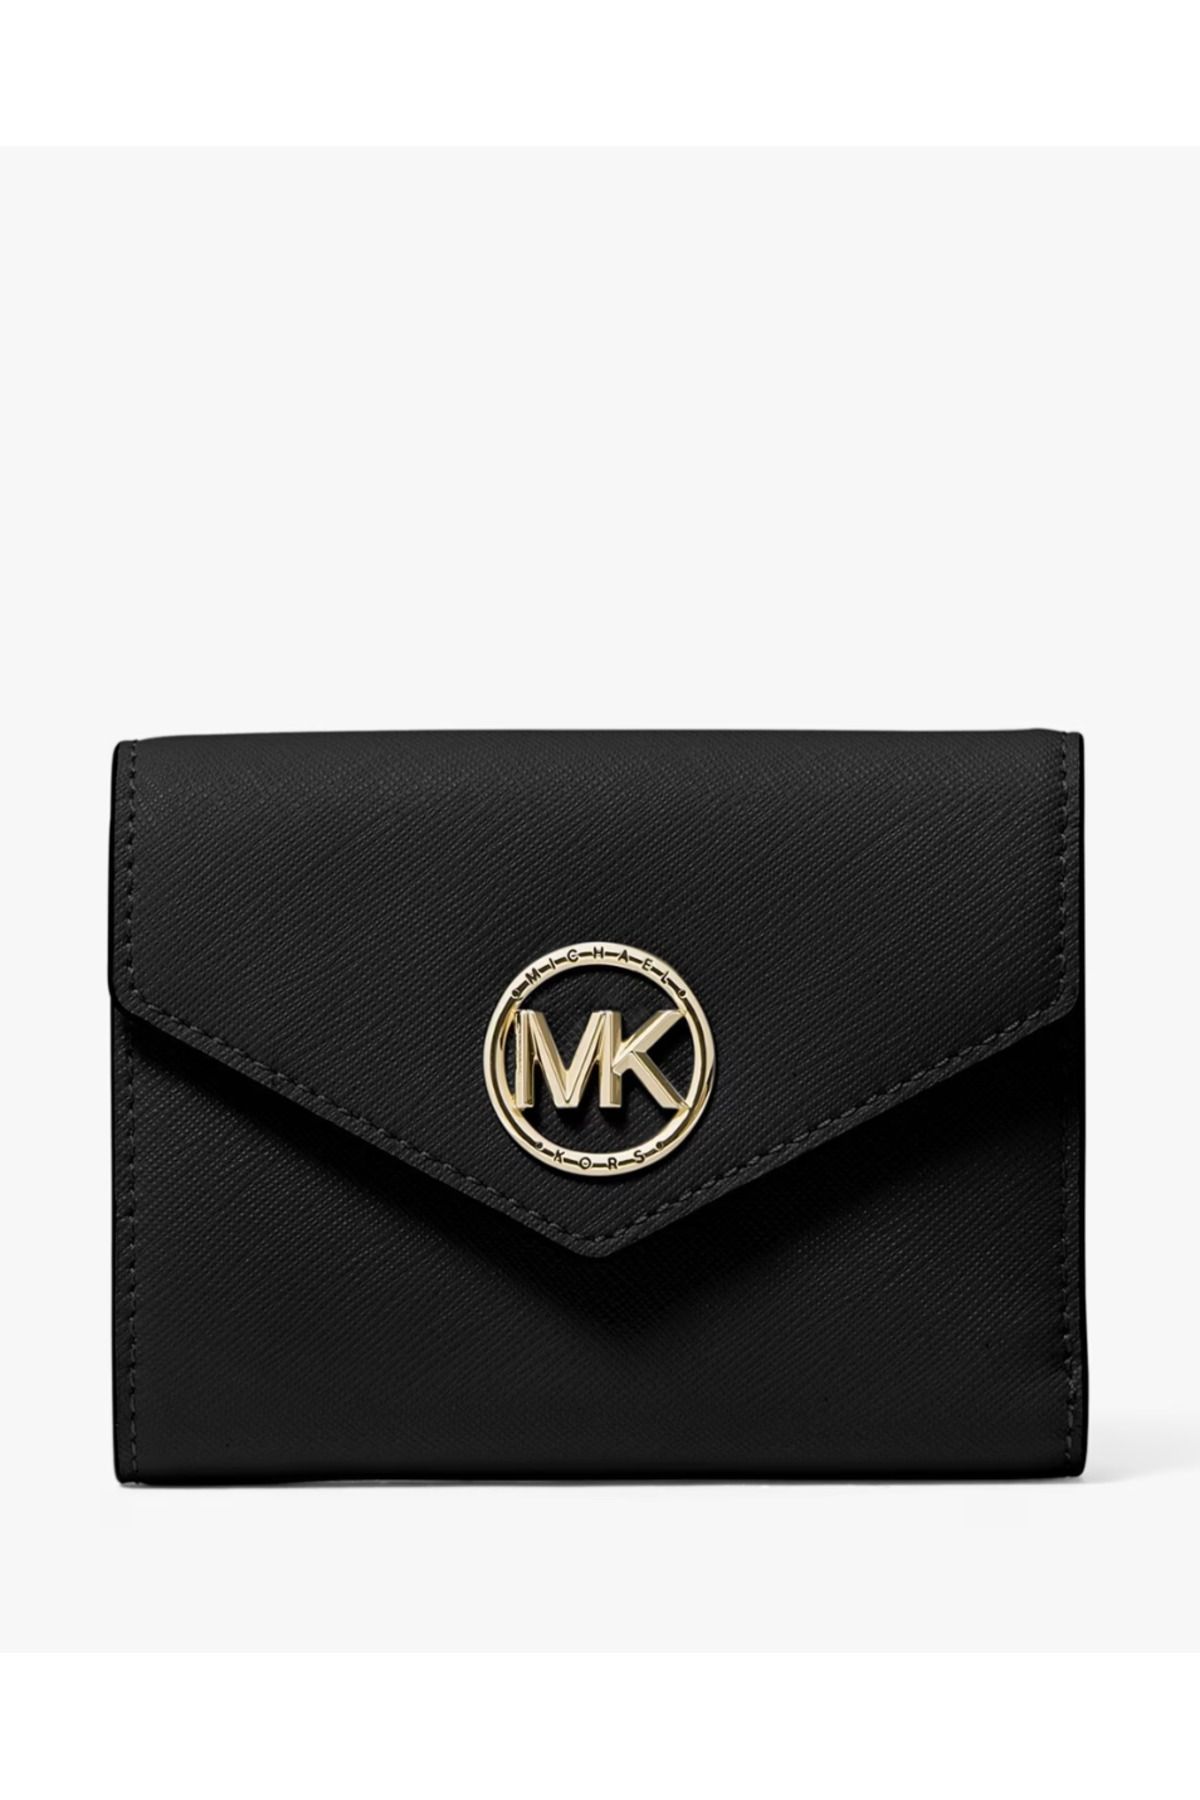 Michael Kors Carmen Medium Saffiano Leather Tri-Fold Envelope Wallet